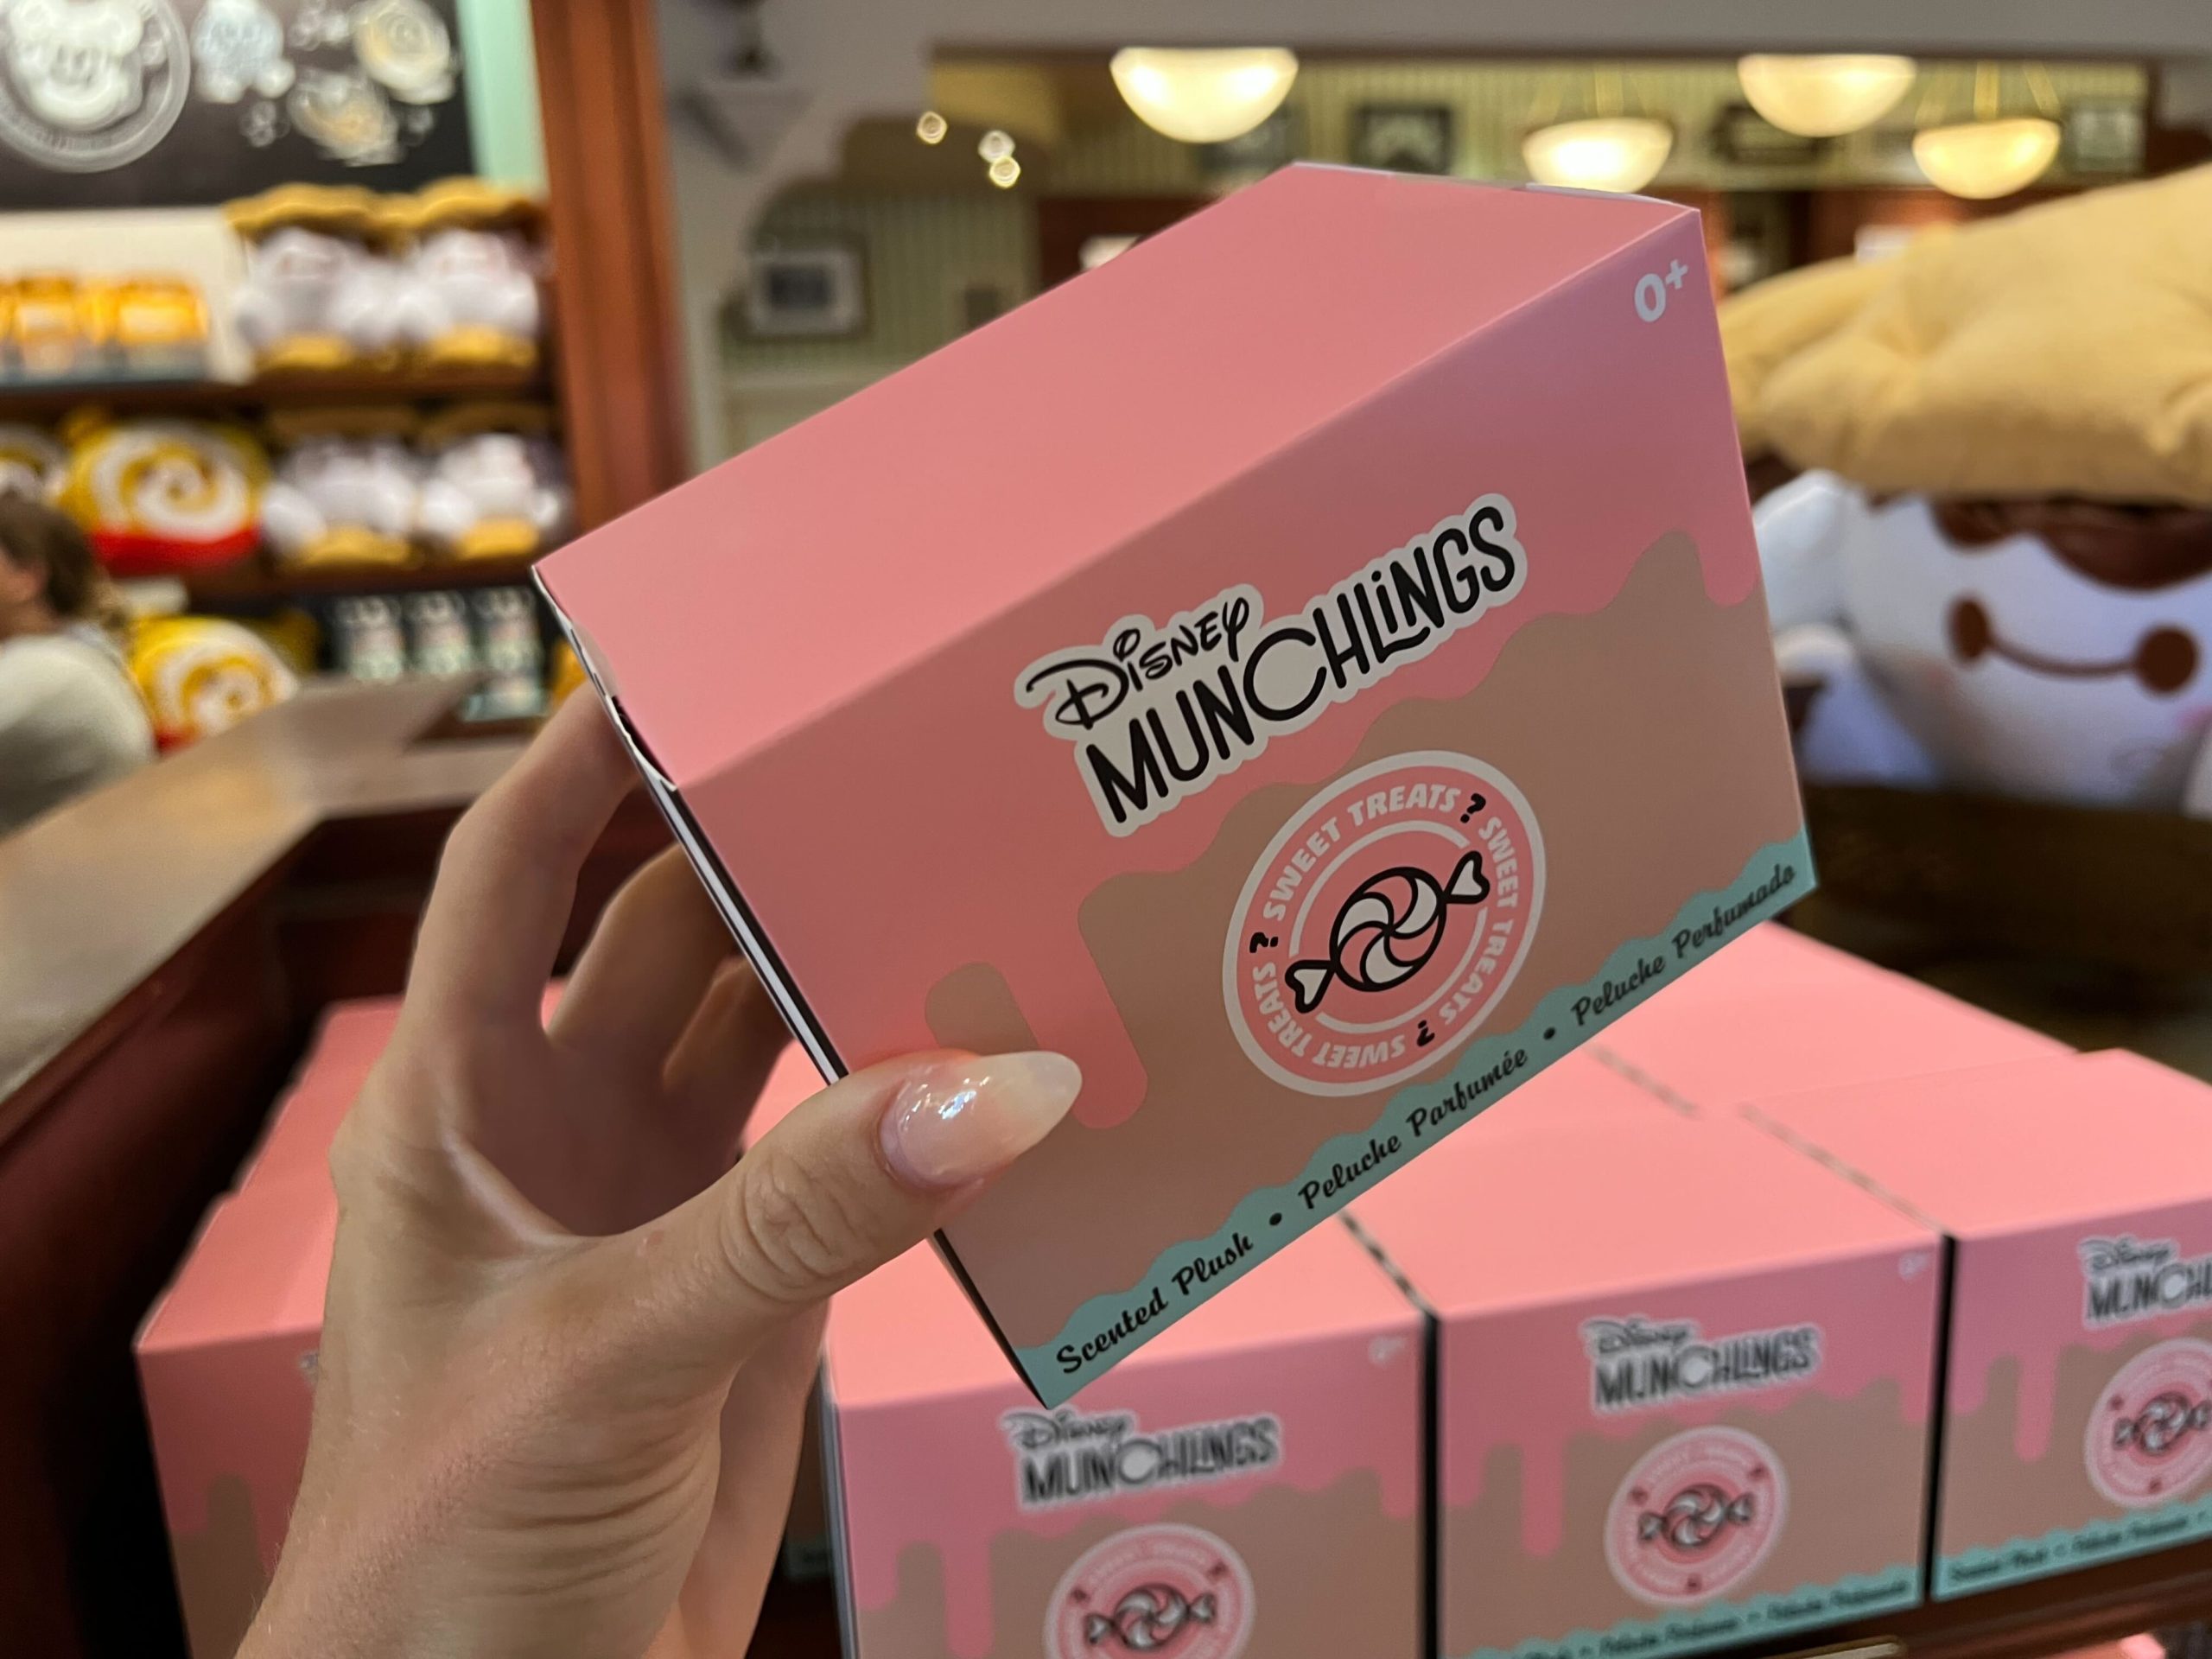 Munchlings mystery pack packaging